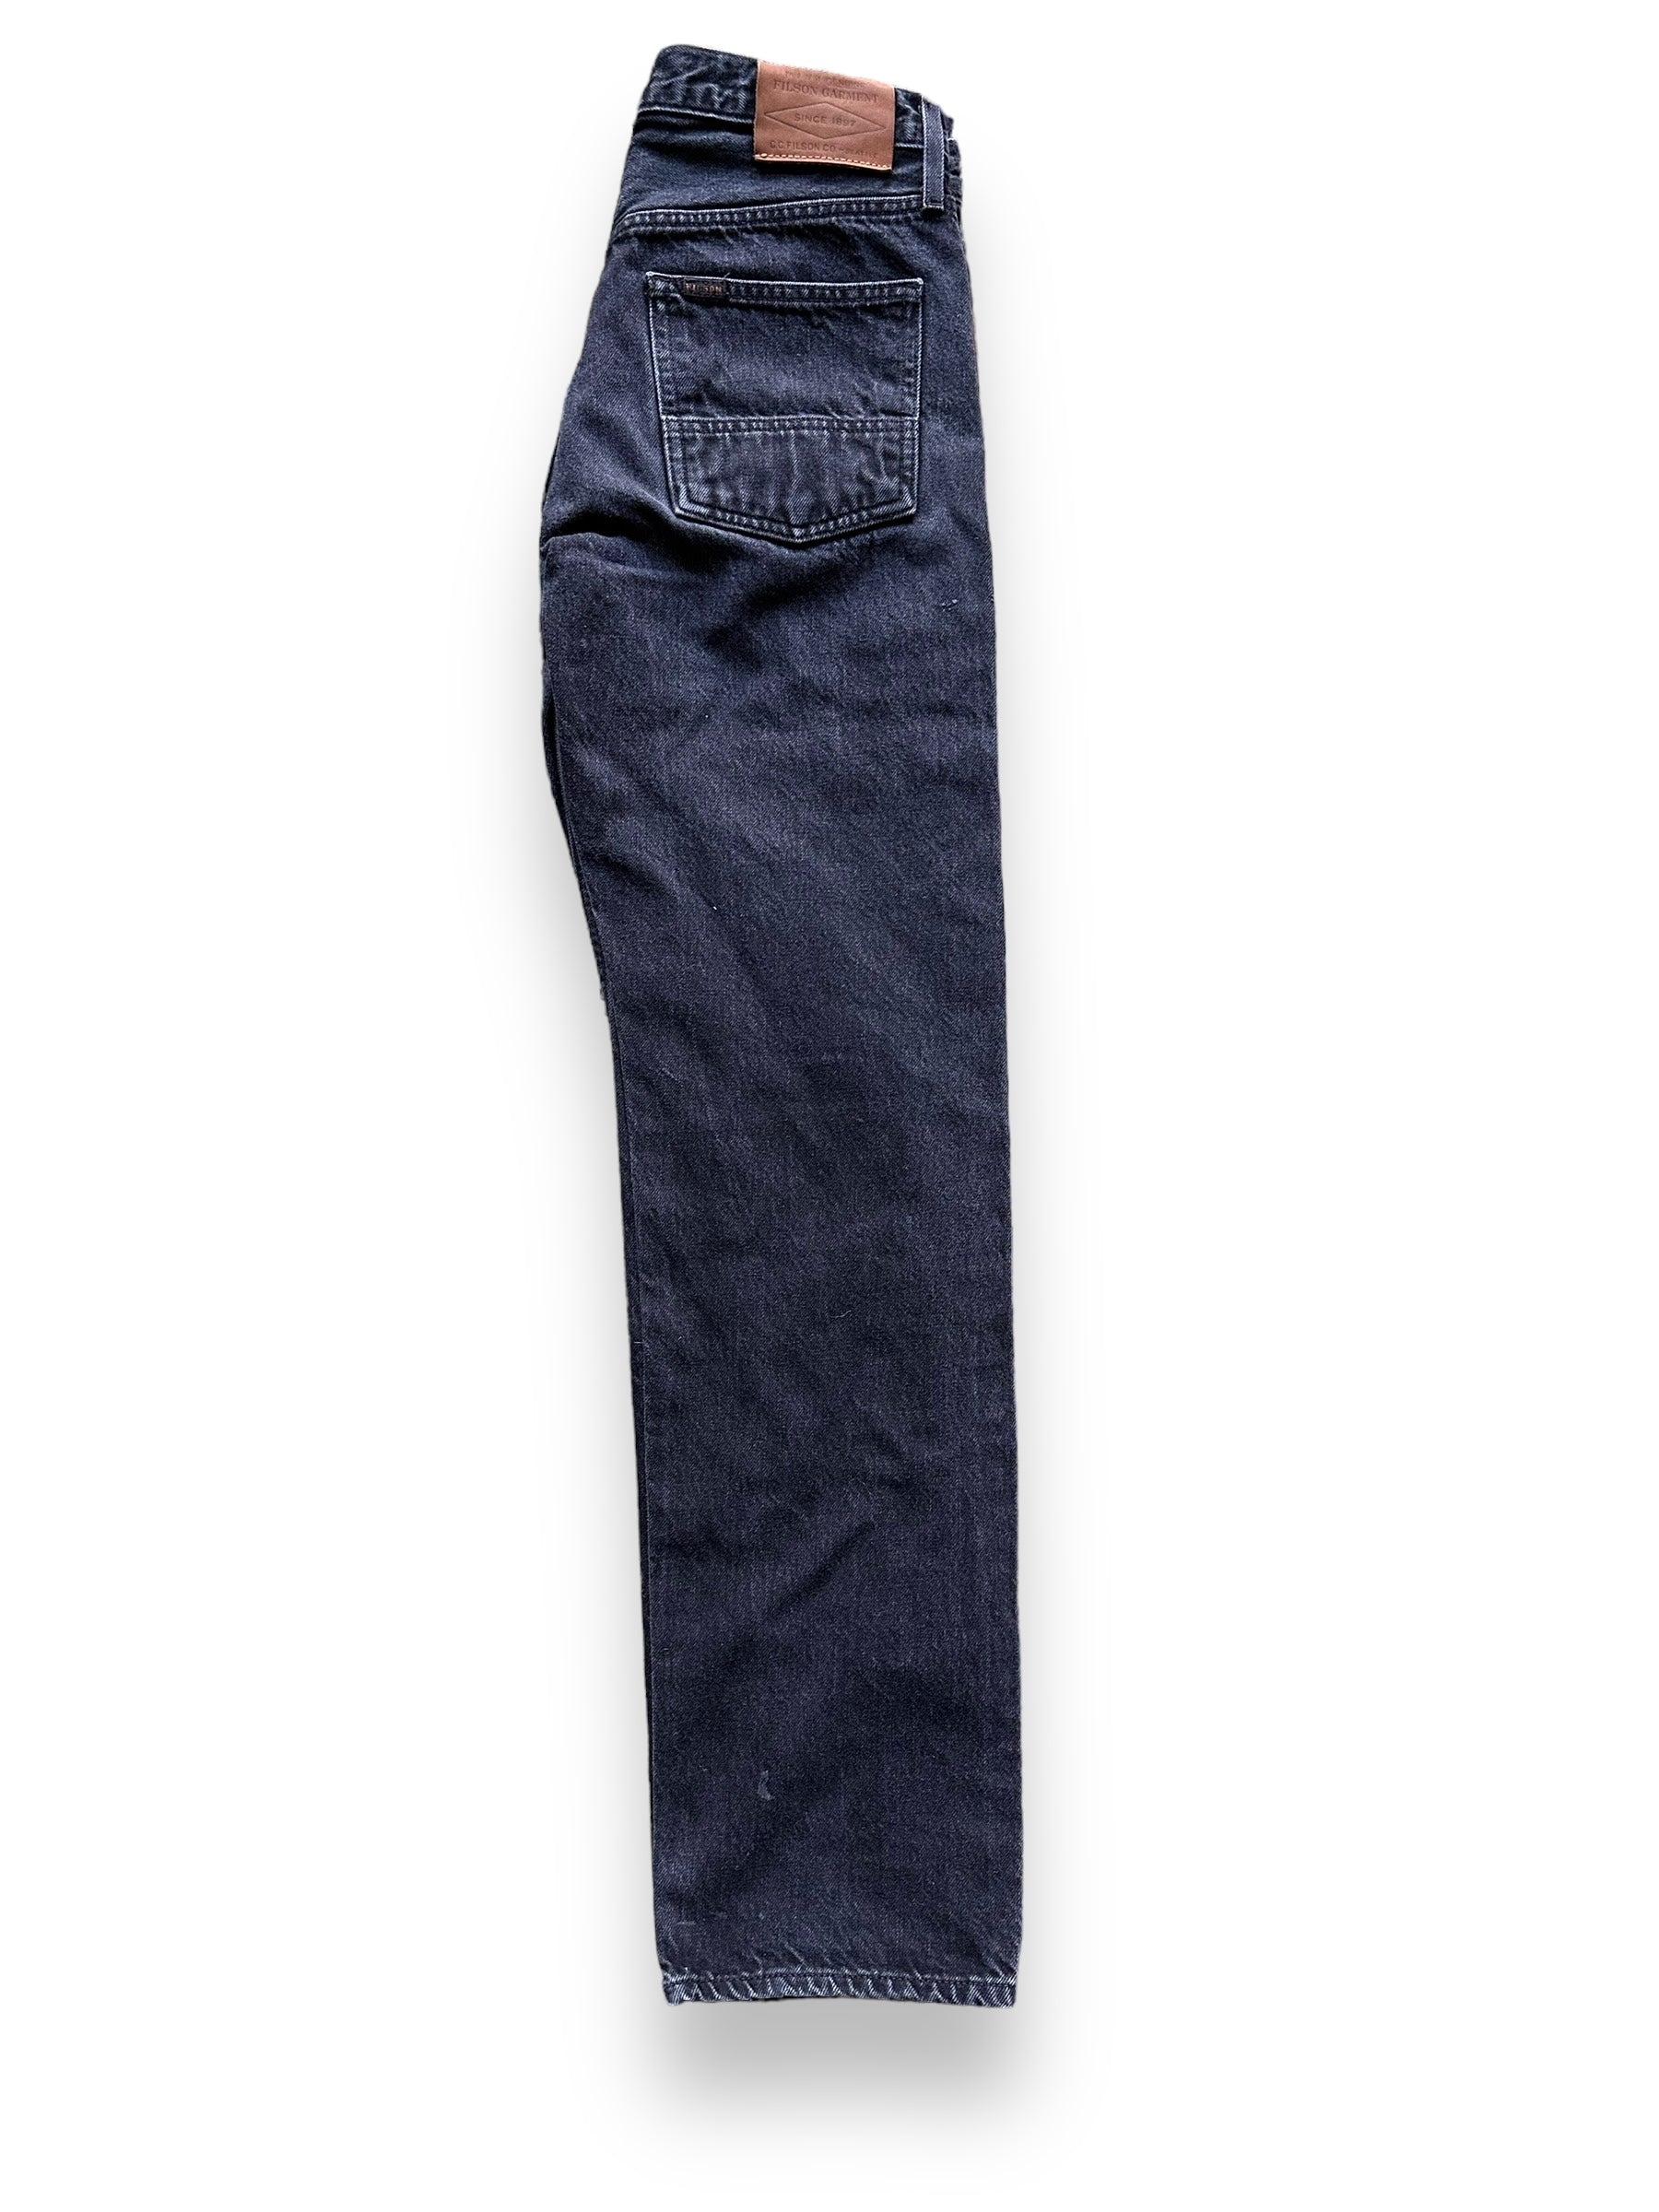 Folded Side View of Black Filson Jeans W31 |  Filson Dungarees | Filson Workwear Seattle